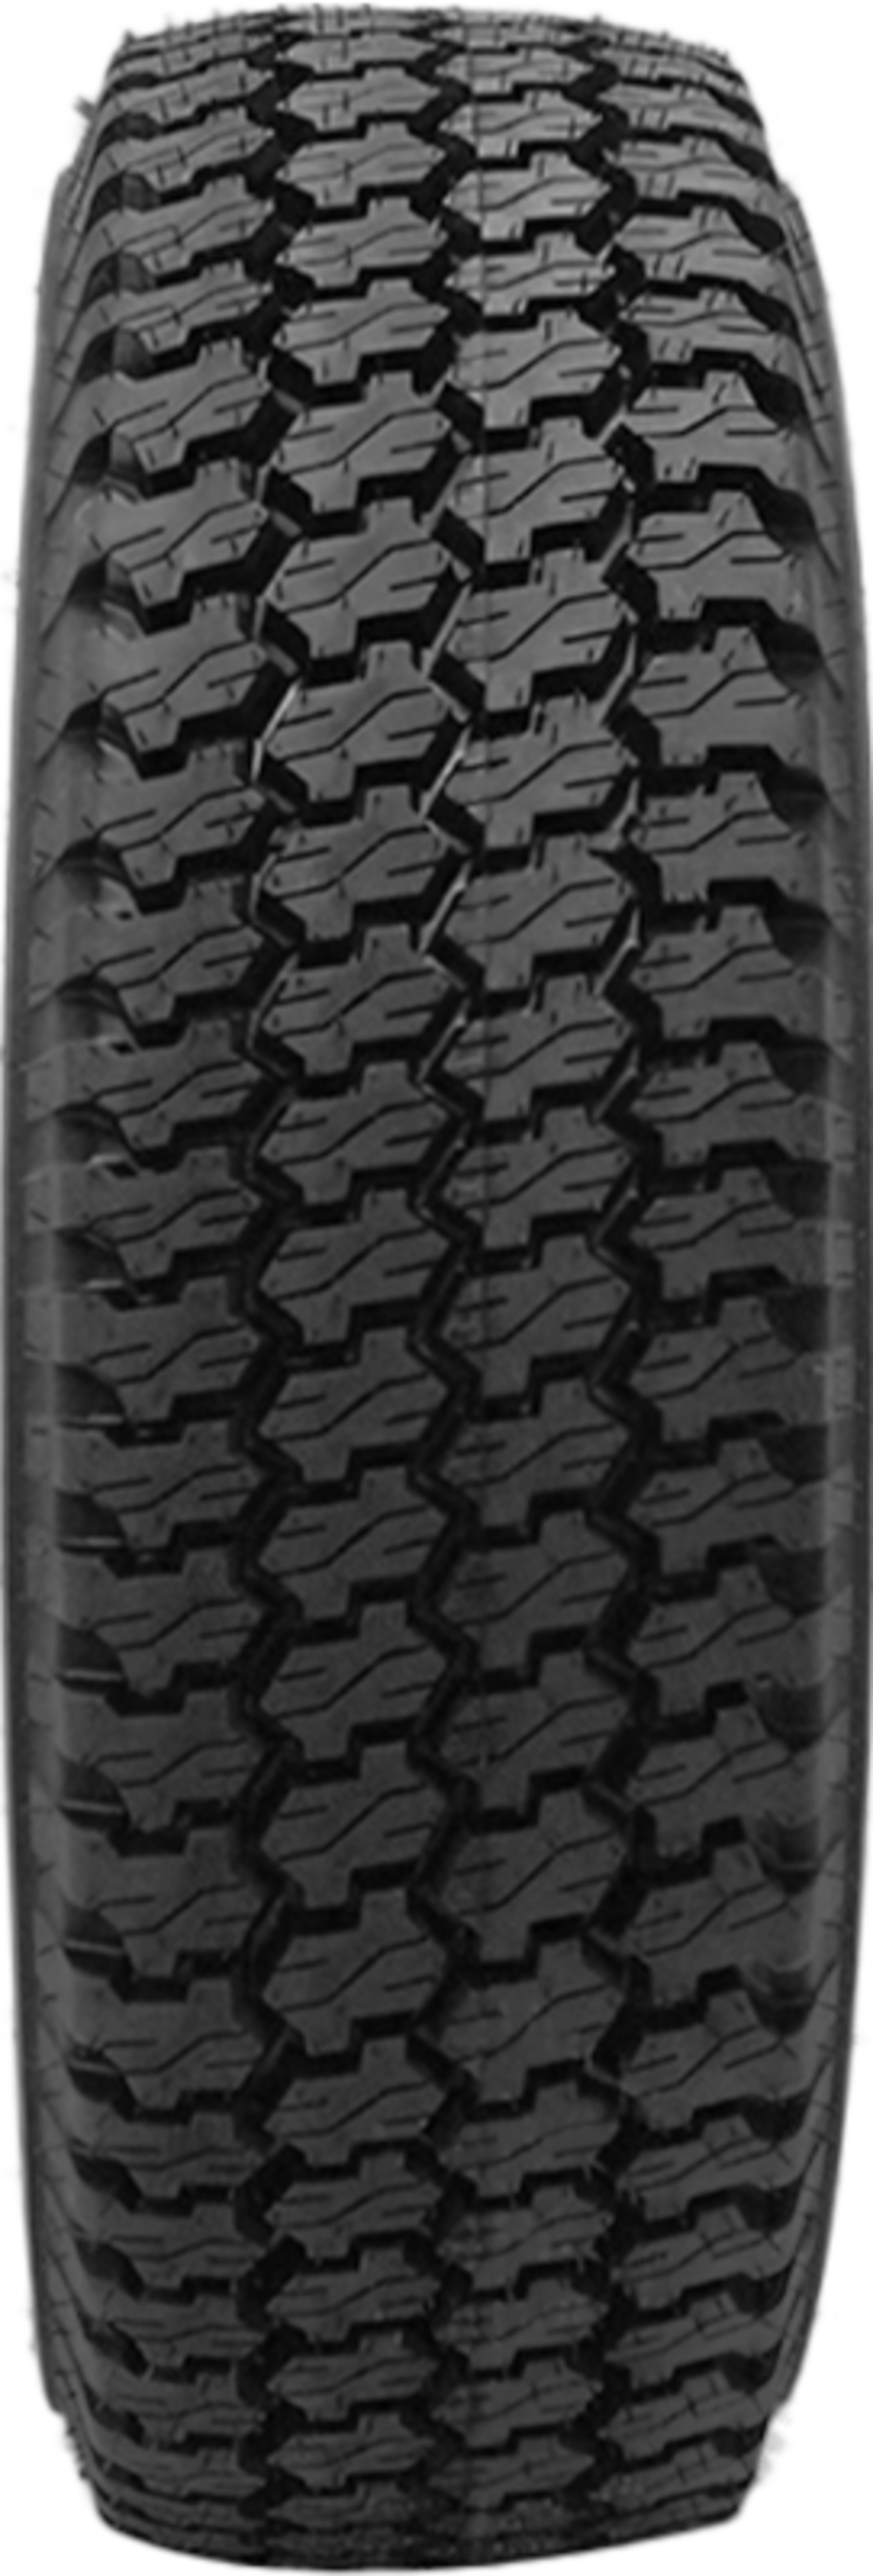 Buy Goodyear Wrangler AT Tires Online | SimpleTire